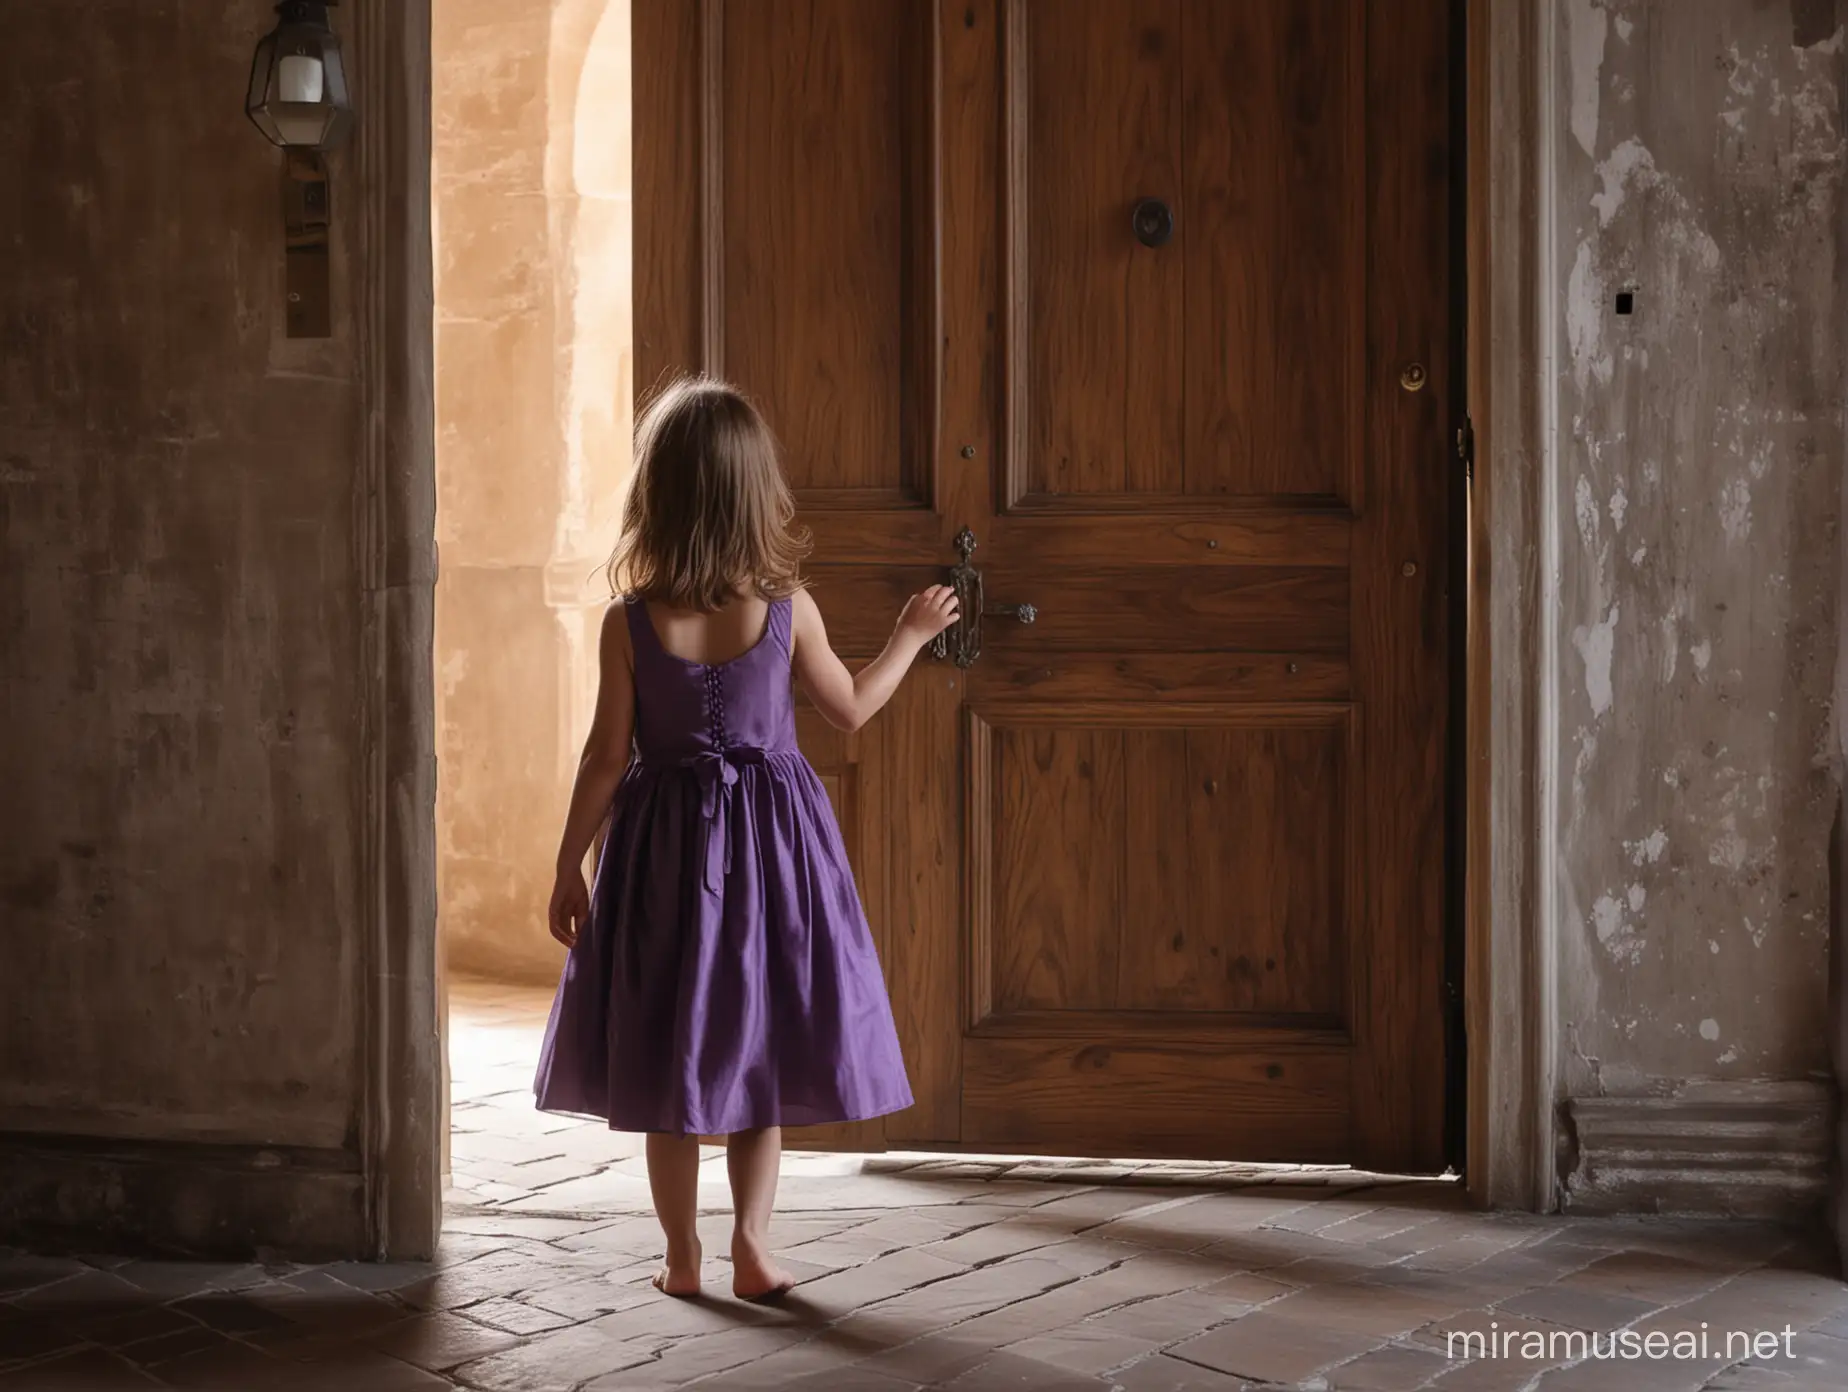 Castle Interior Little Girl Knocking on Dark Wooden Door